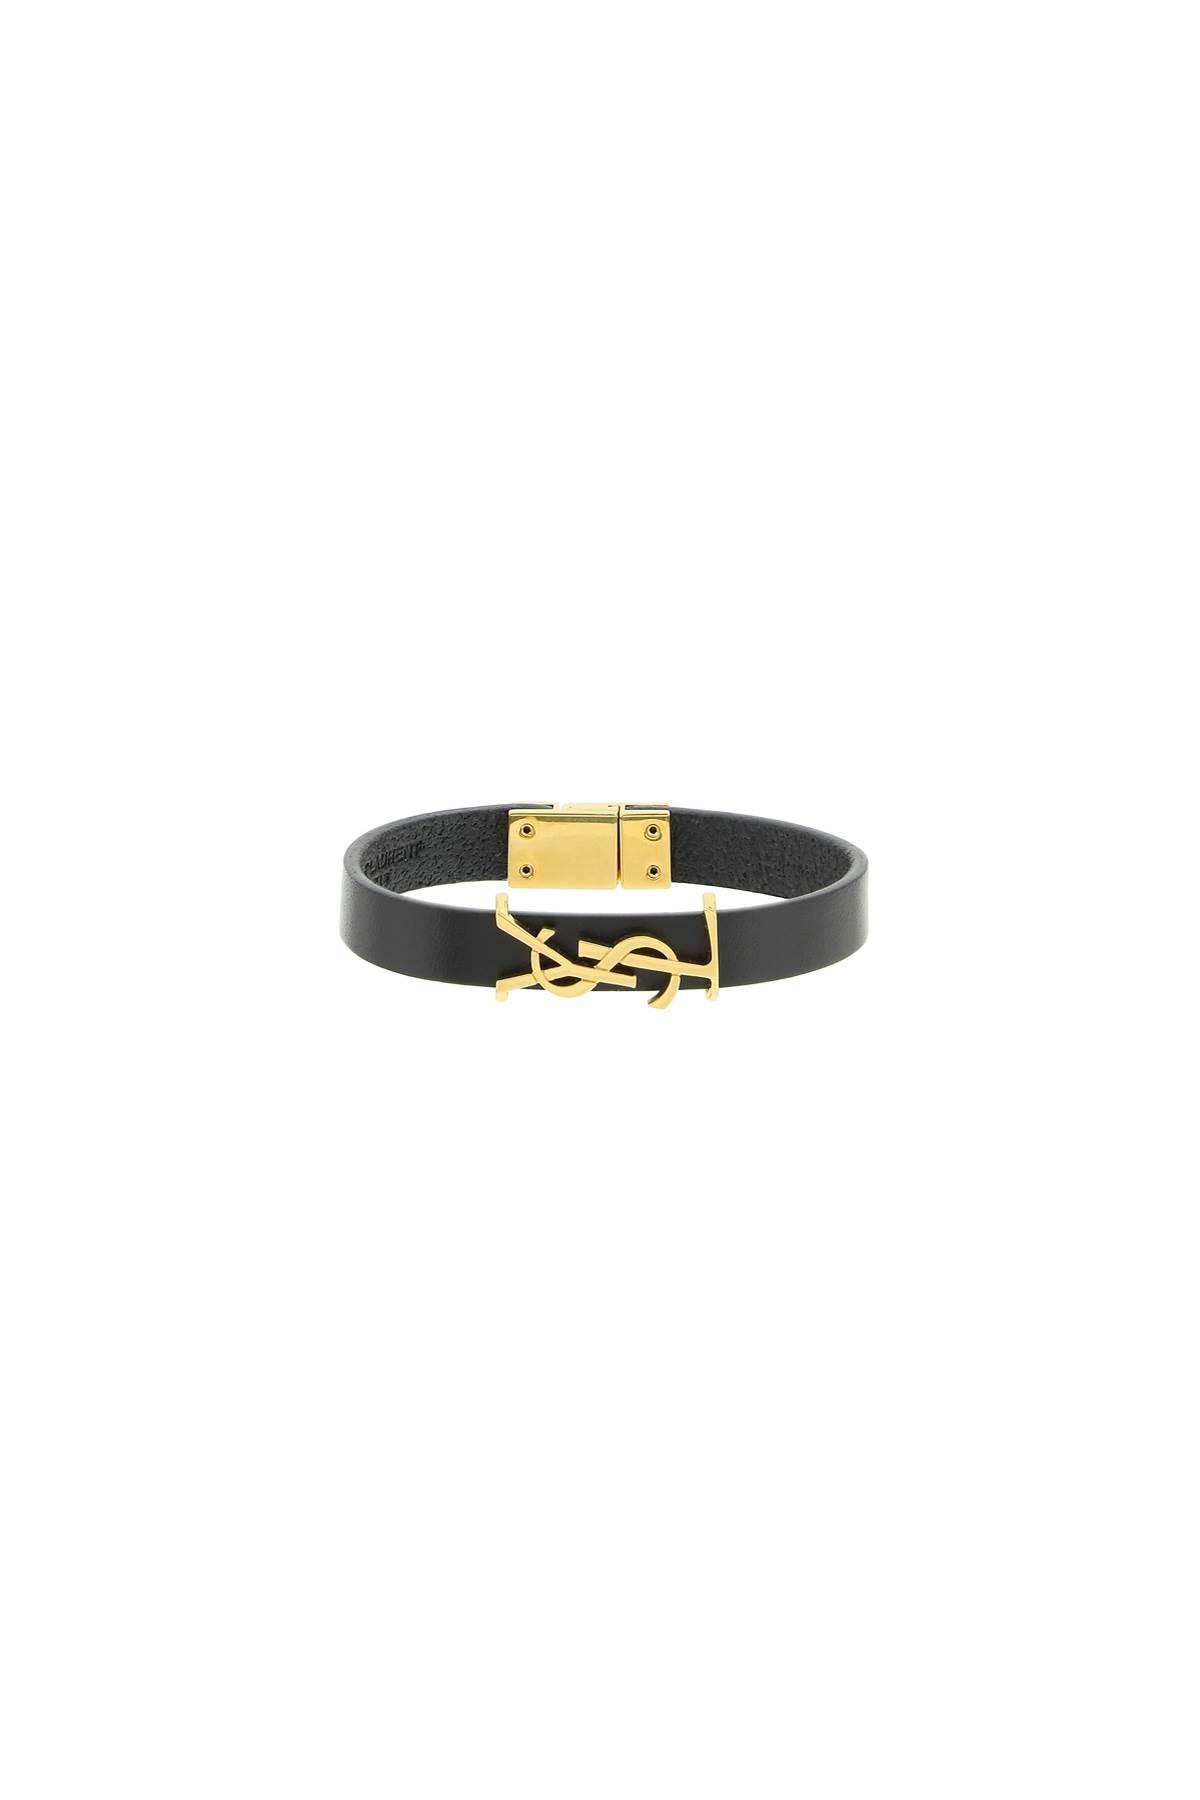 Saint Laurent Leather Bracelet Ysl in Black | Lyst